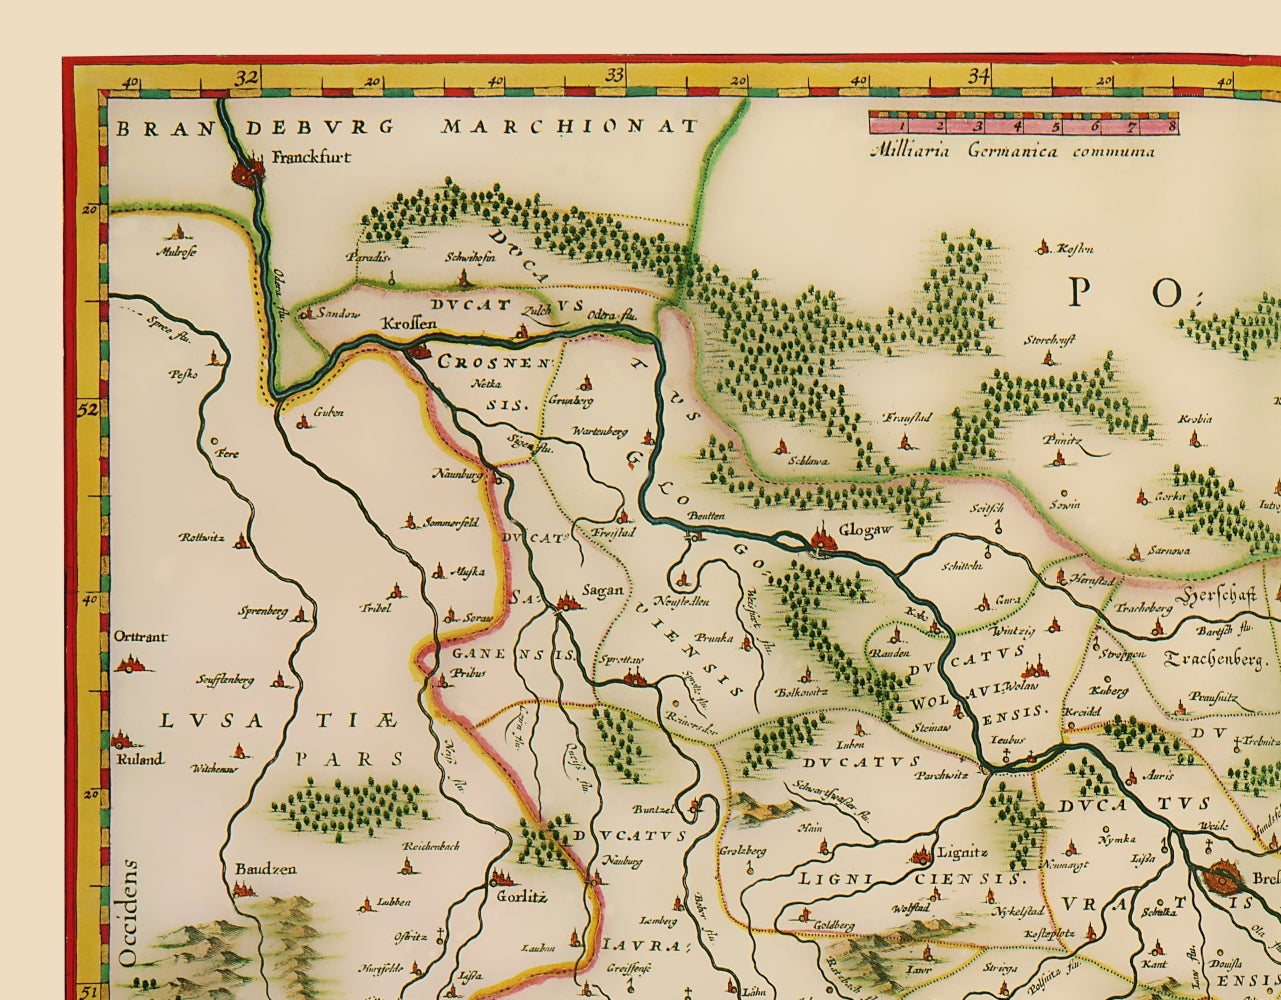 Historic Map - Poland Silesia Region - Blaeu 1635 - 23 x 29.46 - Vintage Wall Art